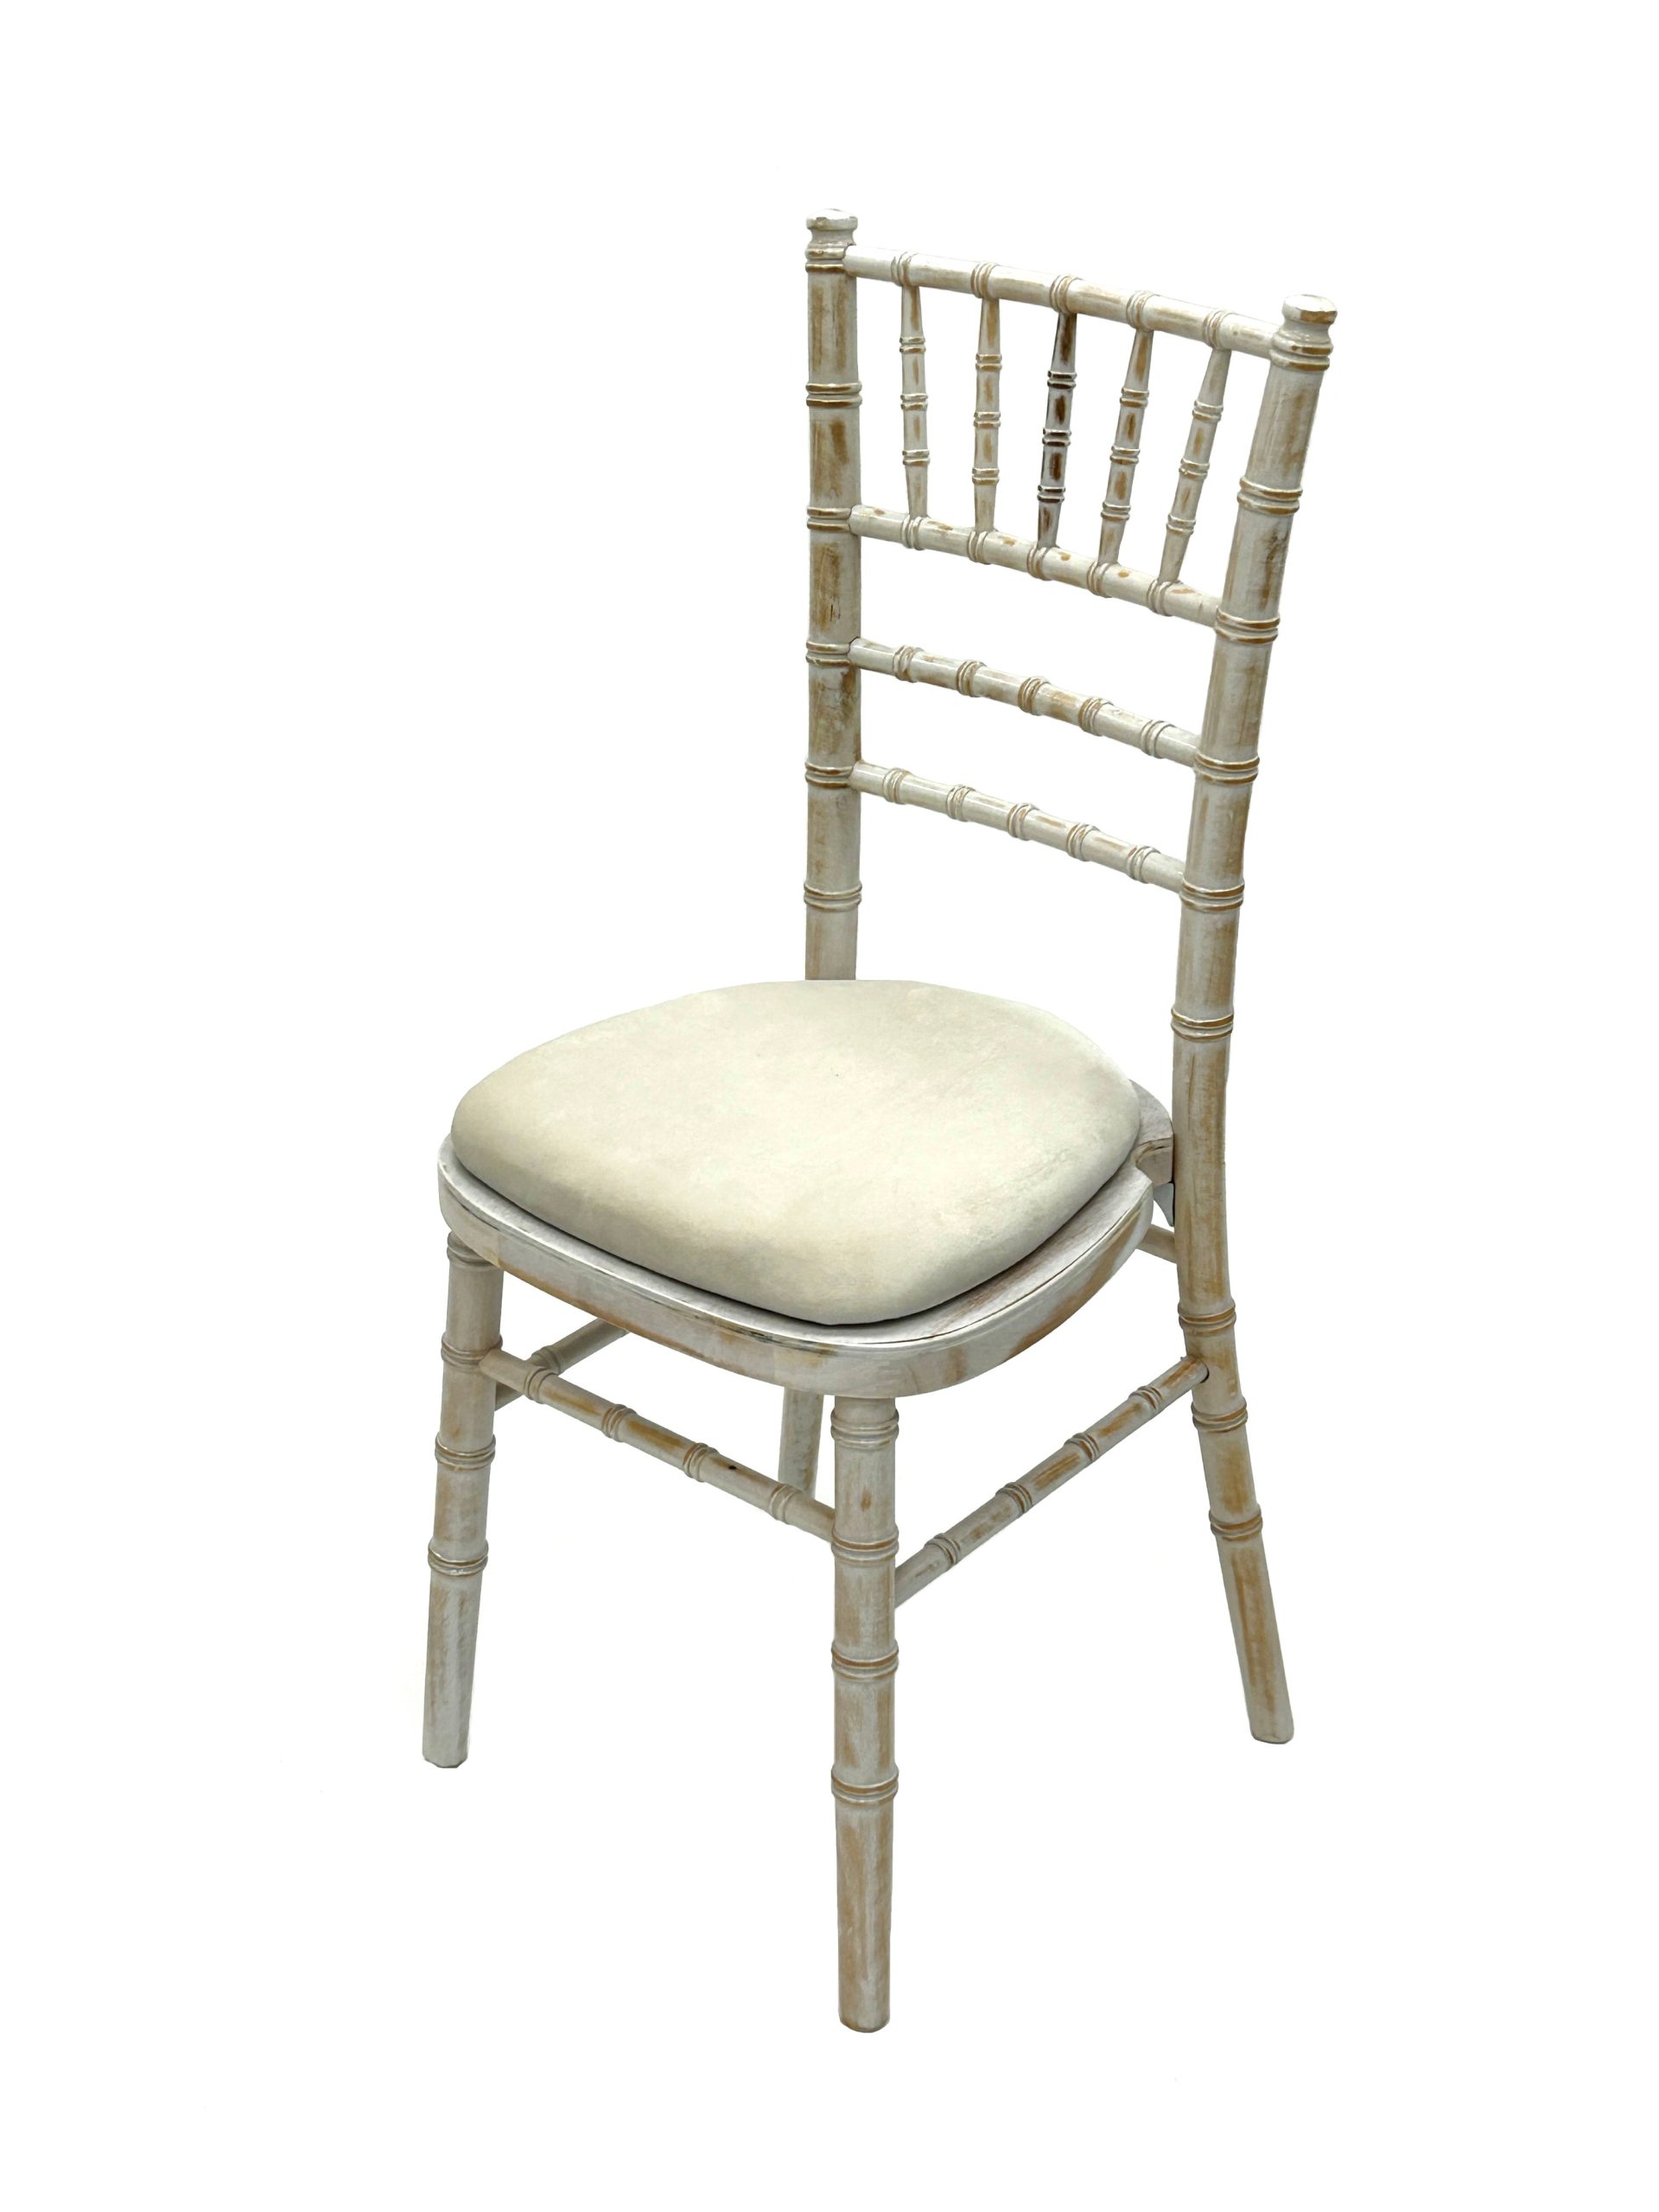 https://www.beeventhire.co.uk/wp-content/uploads/2014/04/CC-03-Limewash-Chiavari-Chair-9-scaled.jpg